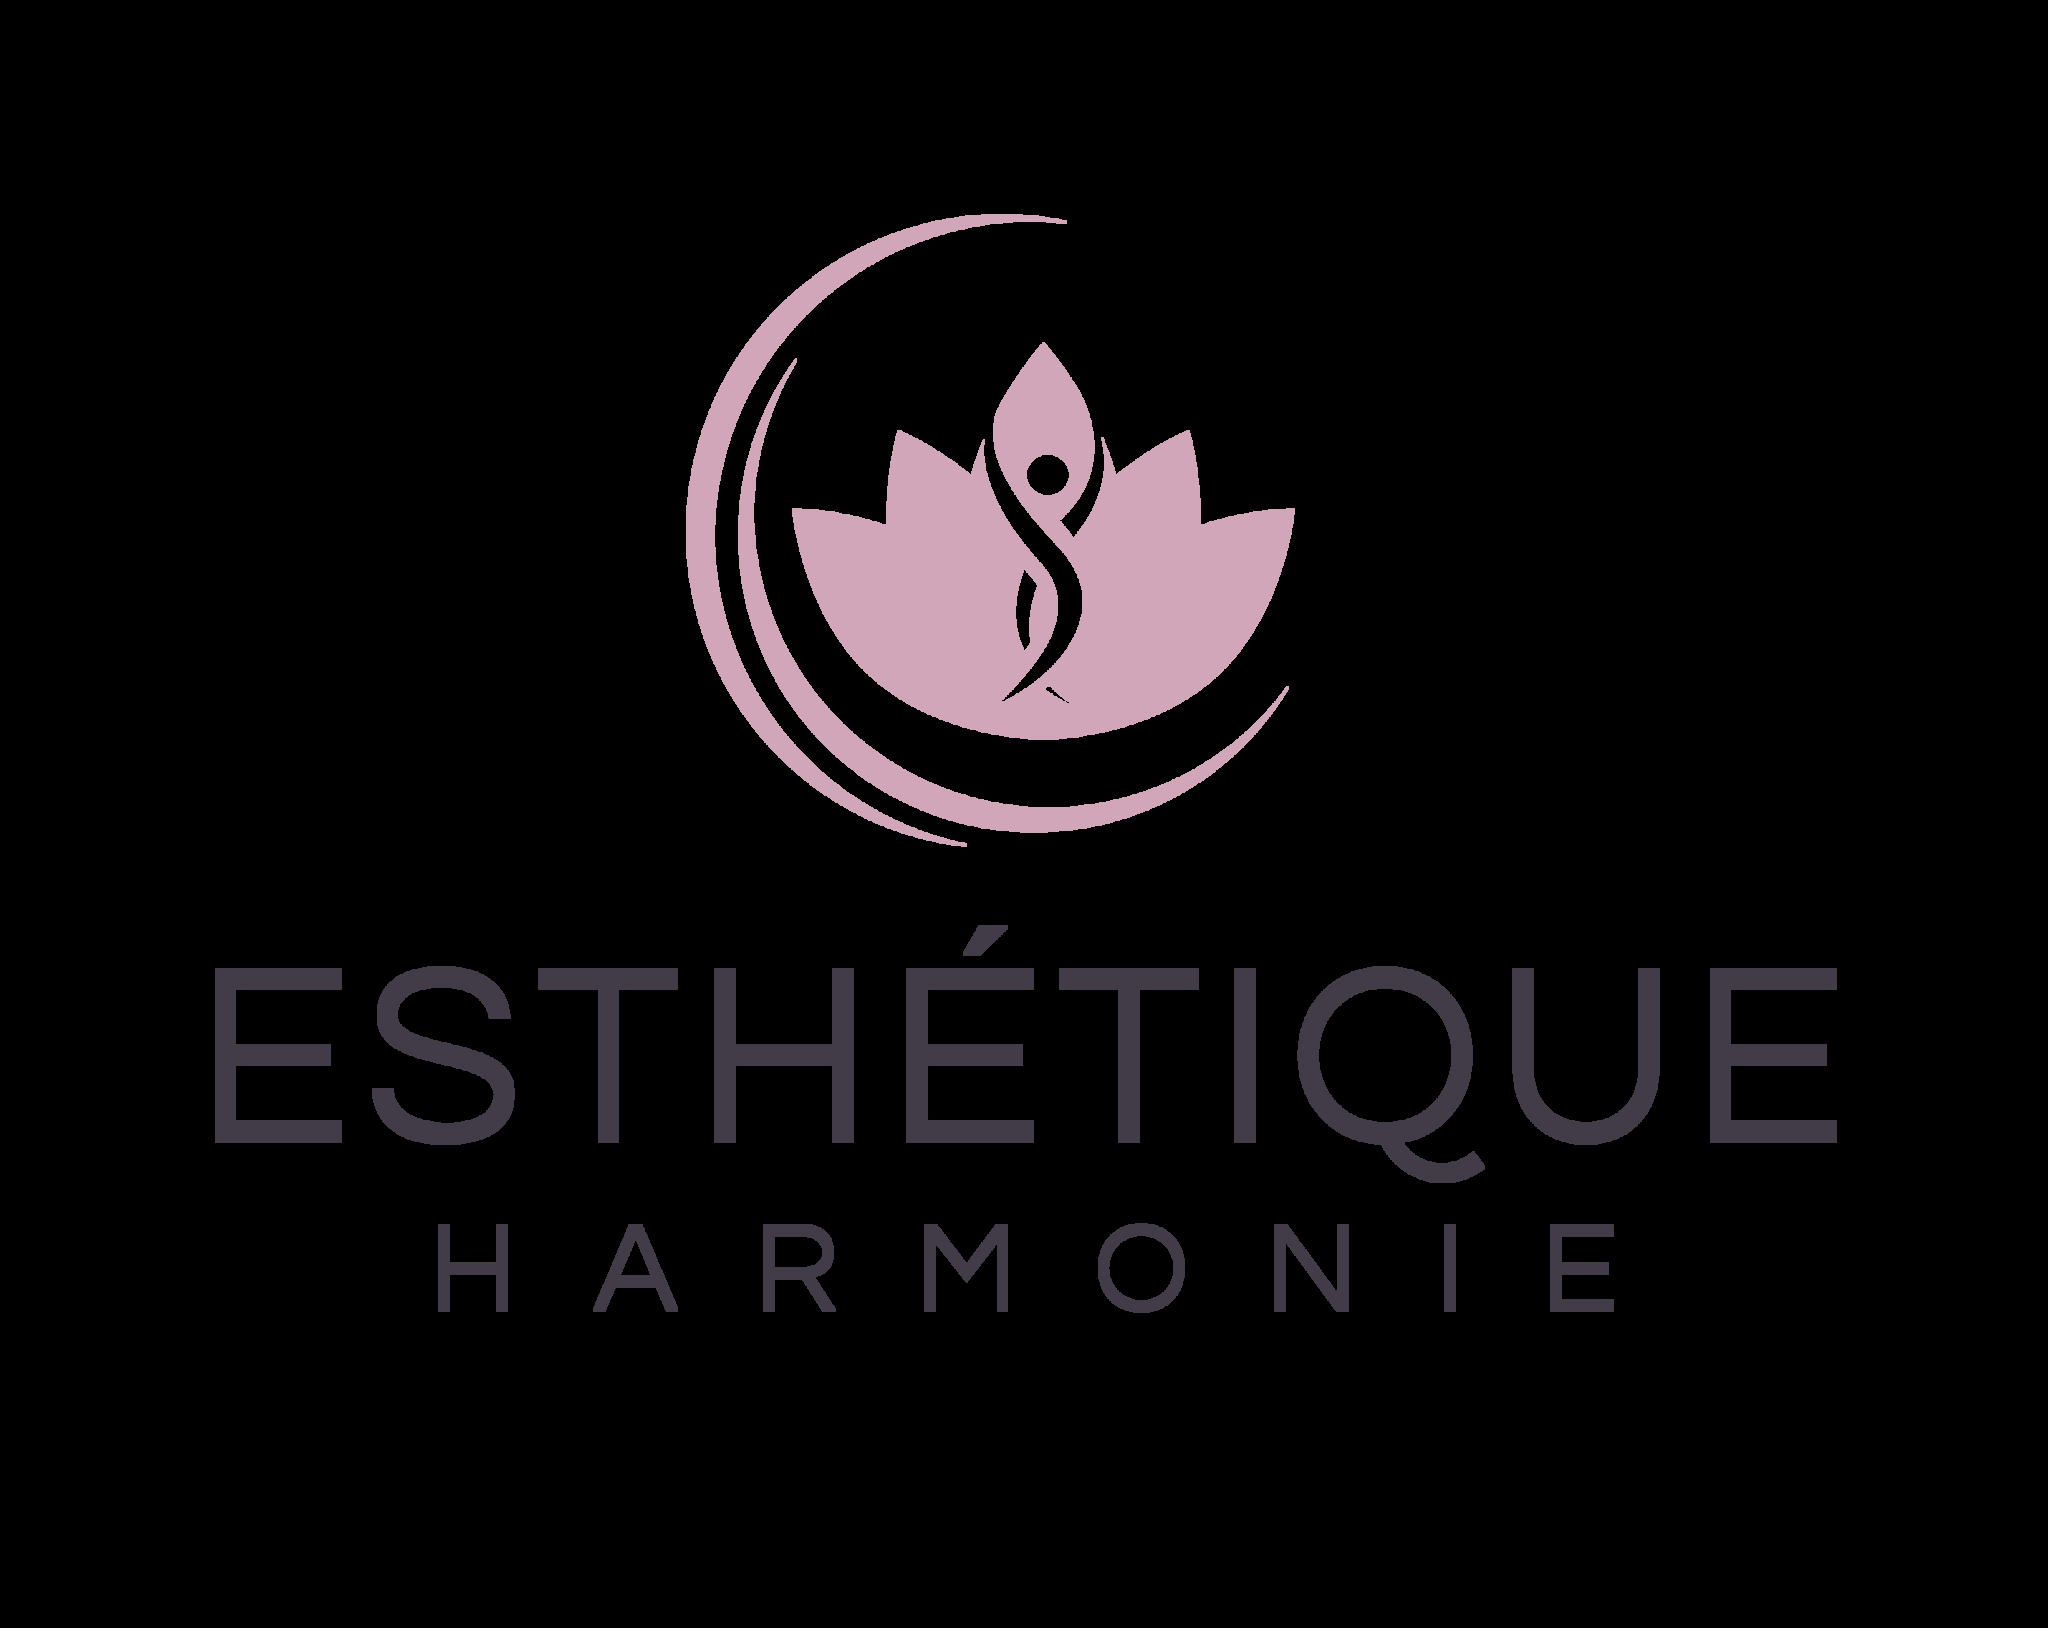 Esthetique Harmonie 417 Av. Jacques Cartier, Disraeli Quebec G0N 1E0